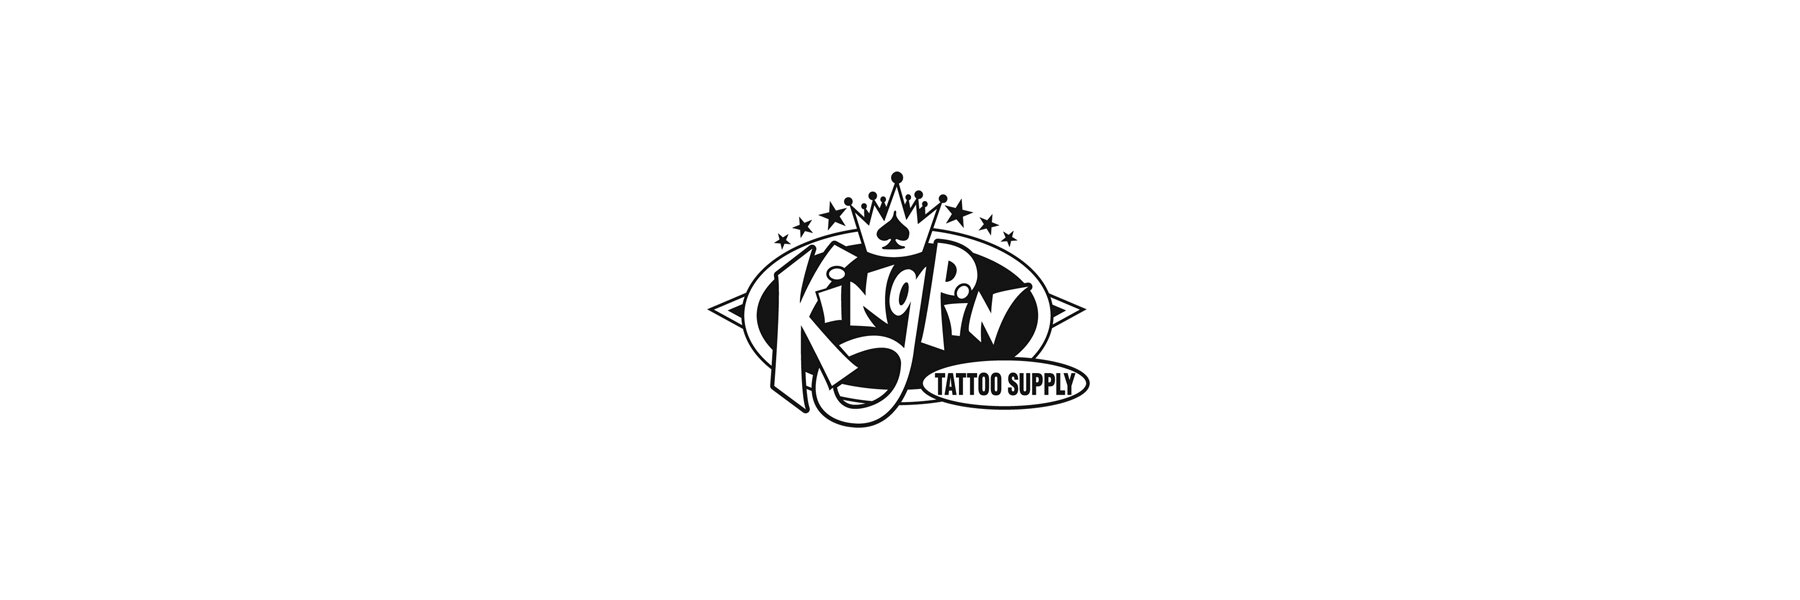 KINGS TATTOO SUPPLY - Tattoo Supply, Tattoo Machine, Tattoo Shops-cheohanoi.vn